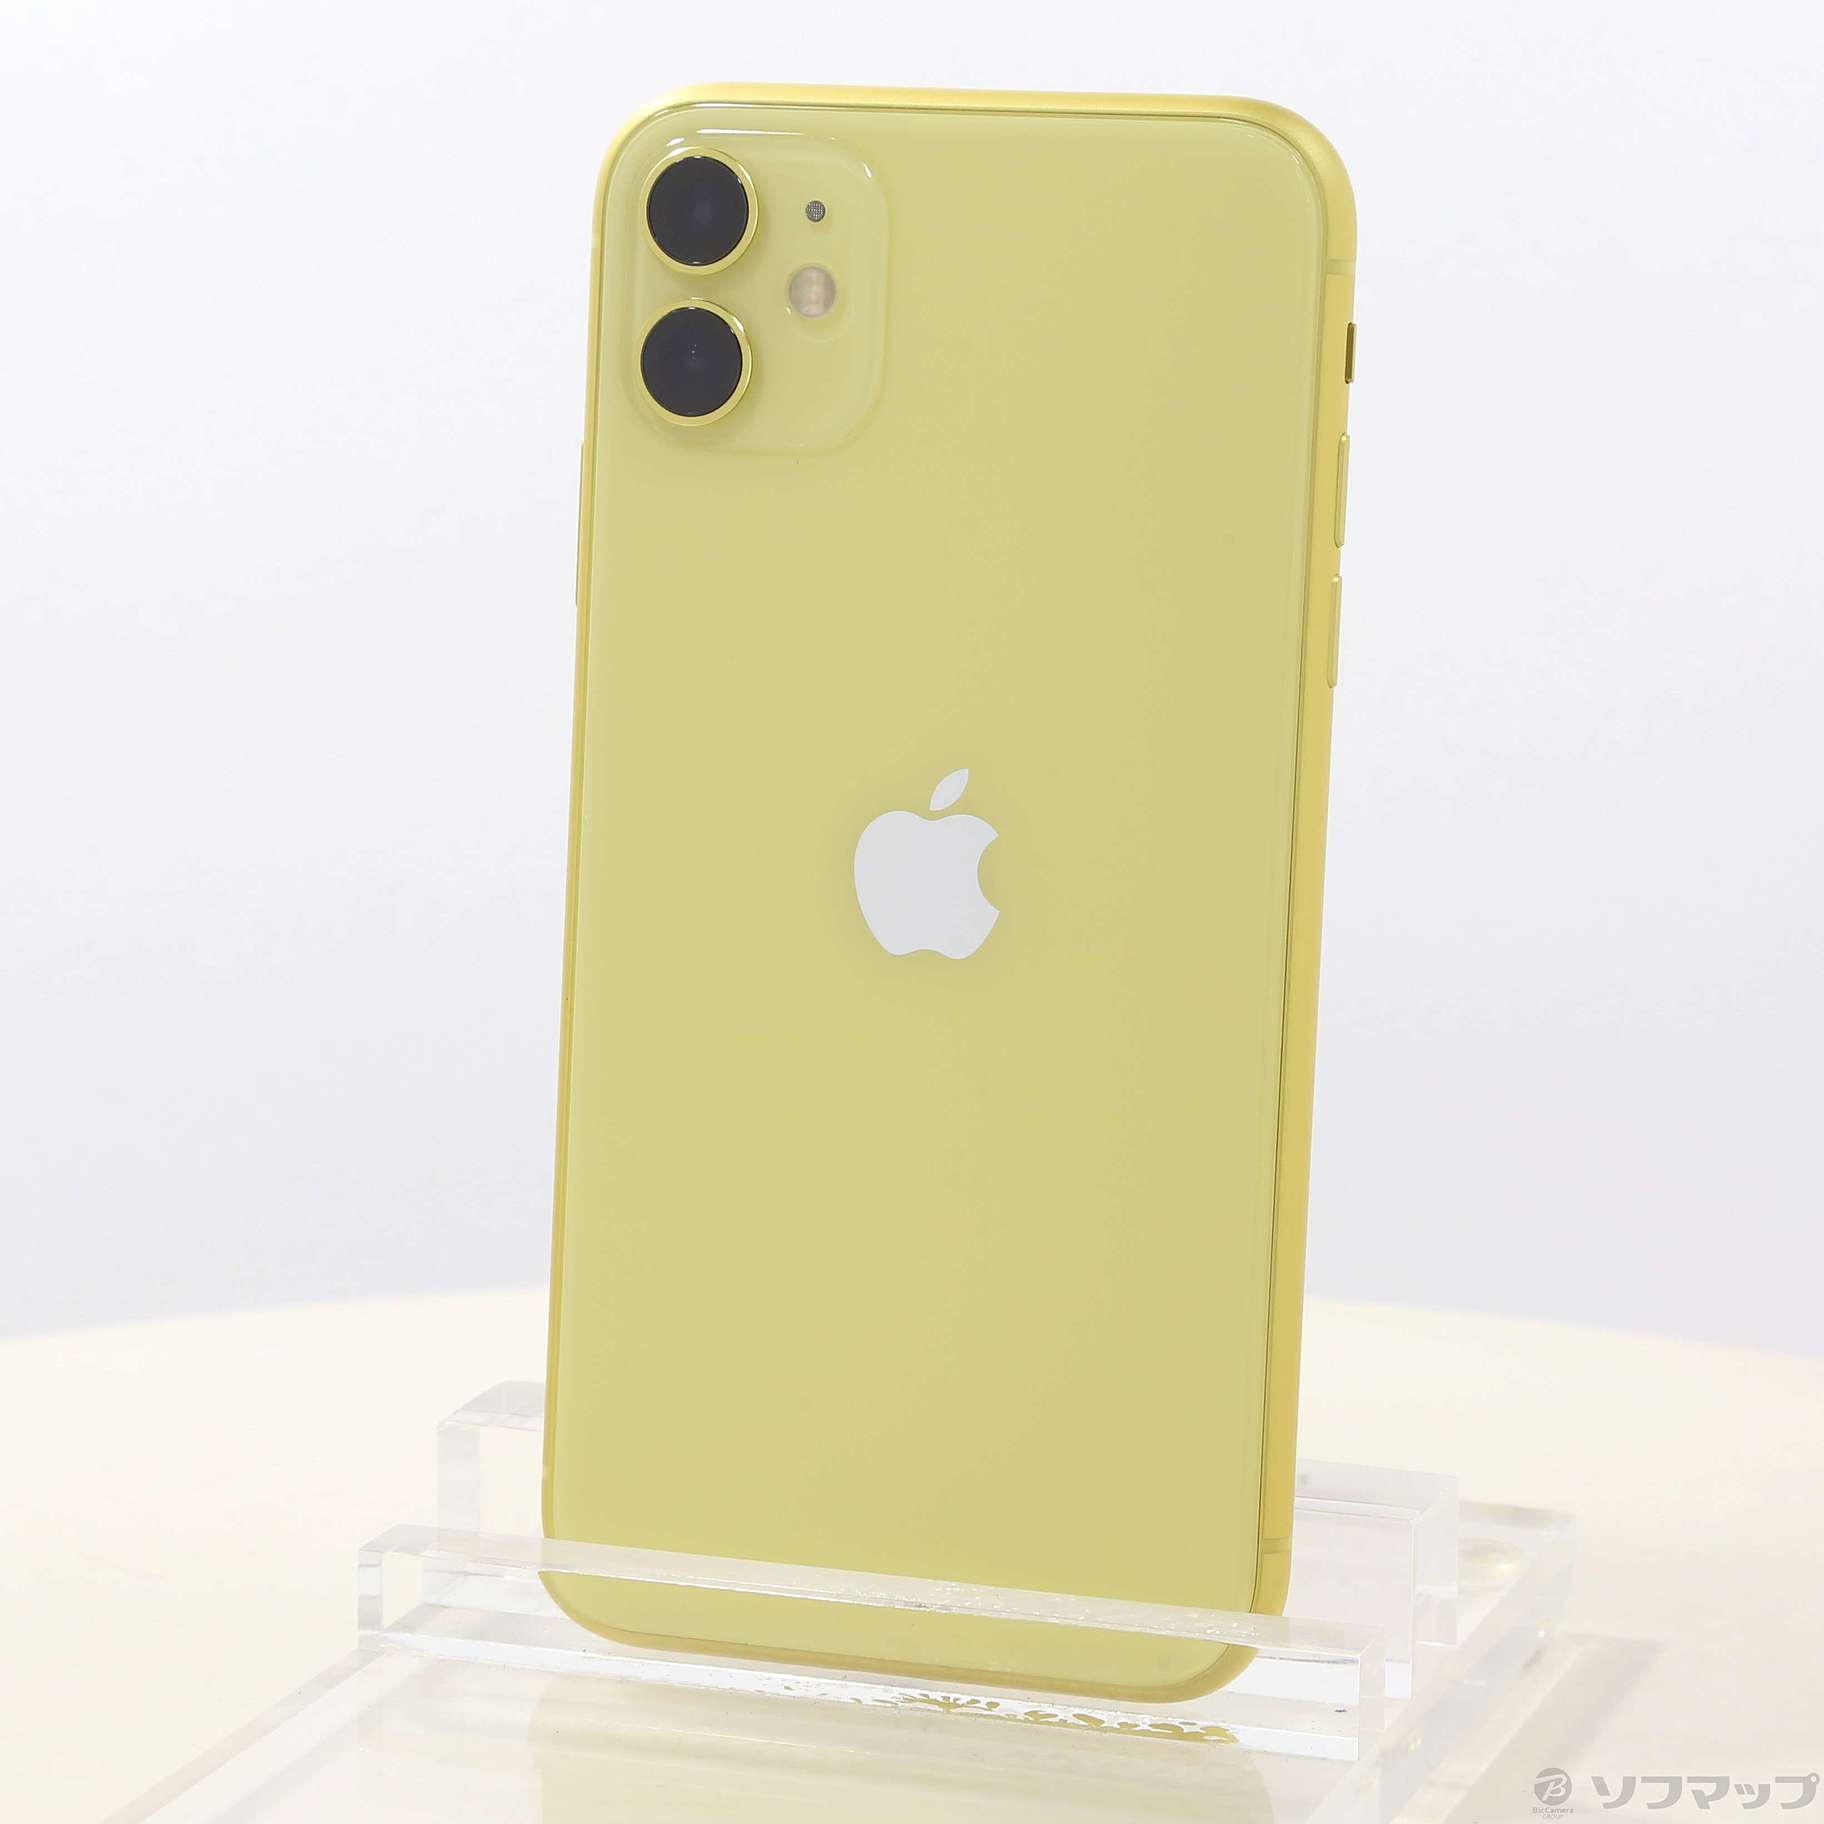 Apple アップル iPhone11 64GB イエロー MHDE3J A S | cprc.org.au